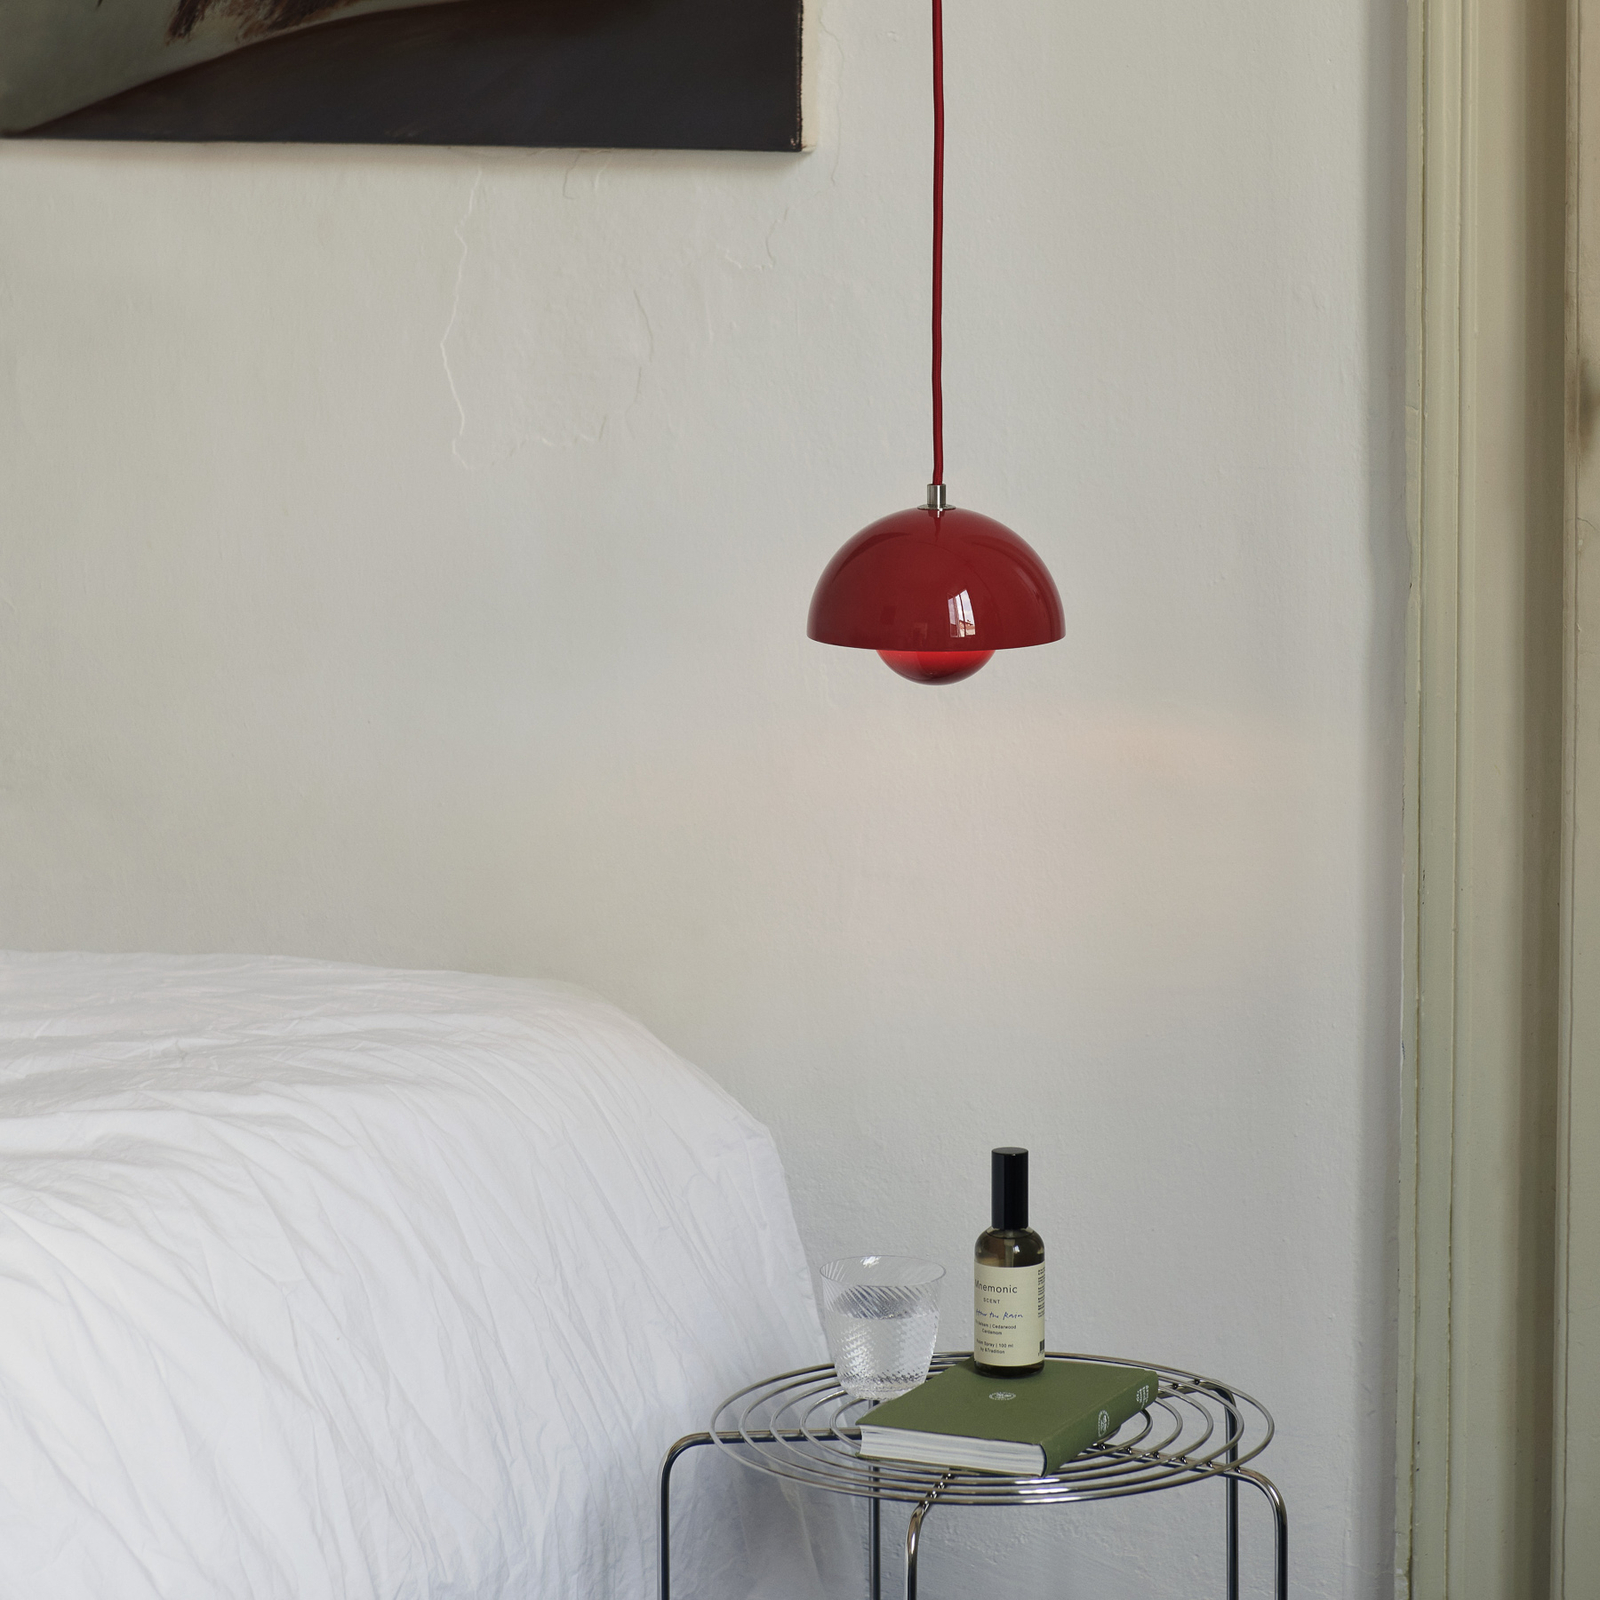 &Tradition hanglamp Flowerpot VP10, Ø 16 cm, vermiljoen rood